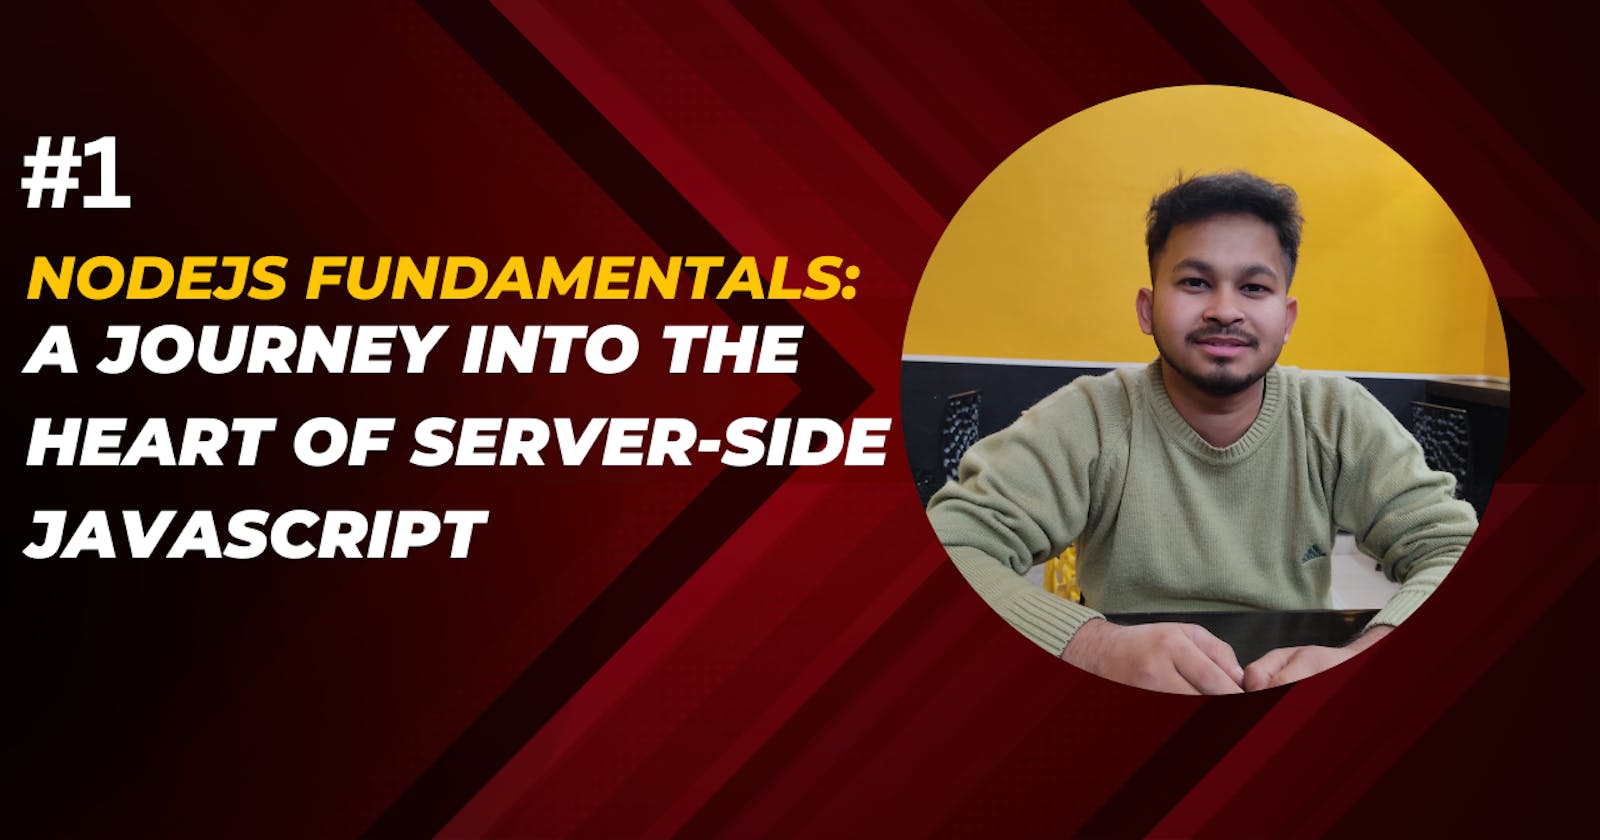 NodeJS Fundamentals: A Journey into the Heart of Server-side JavaScript